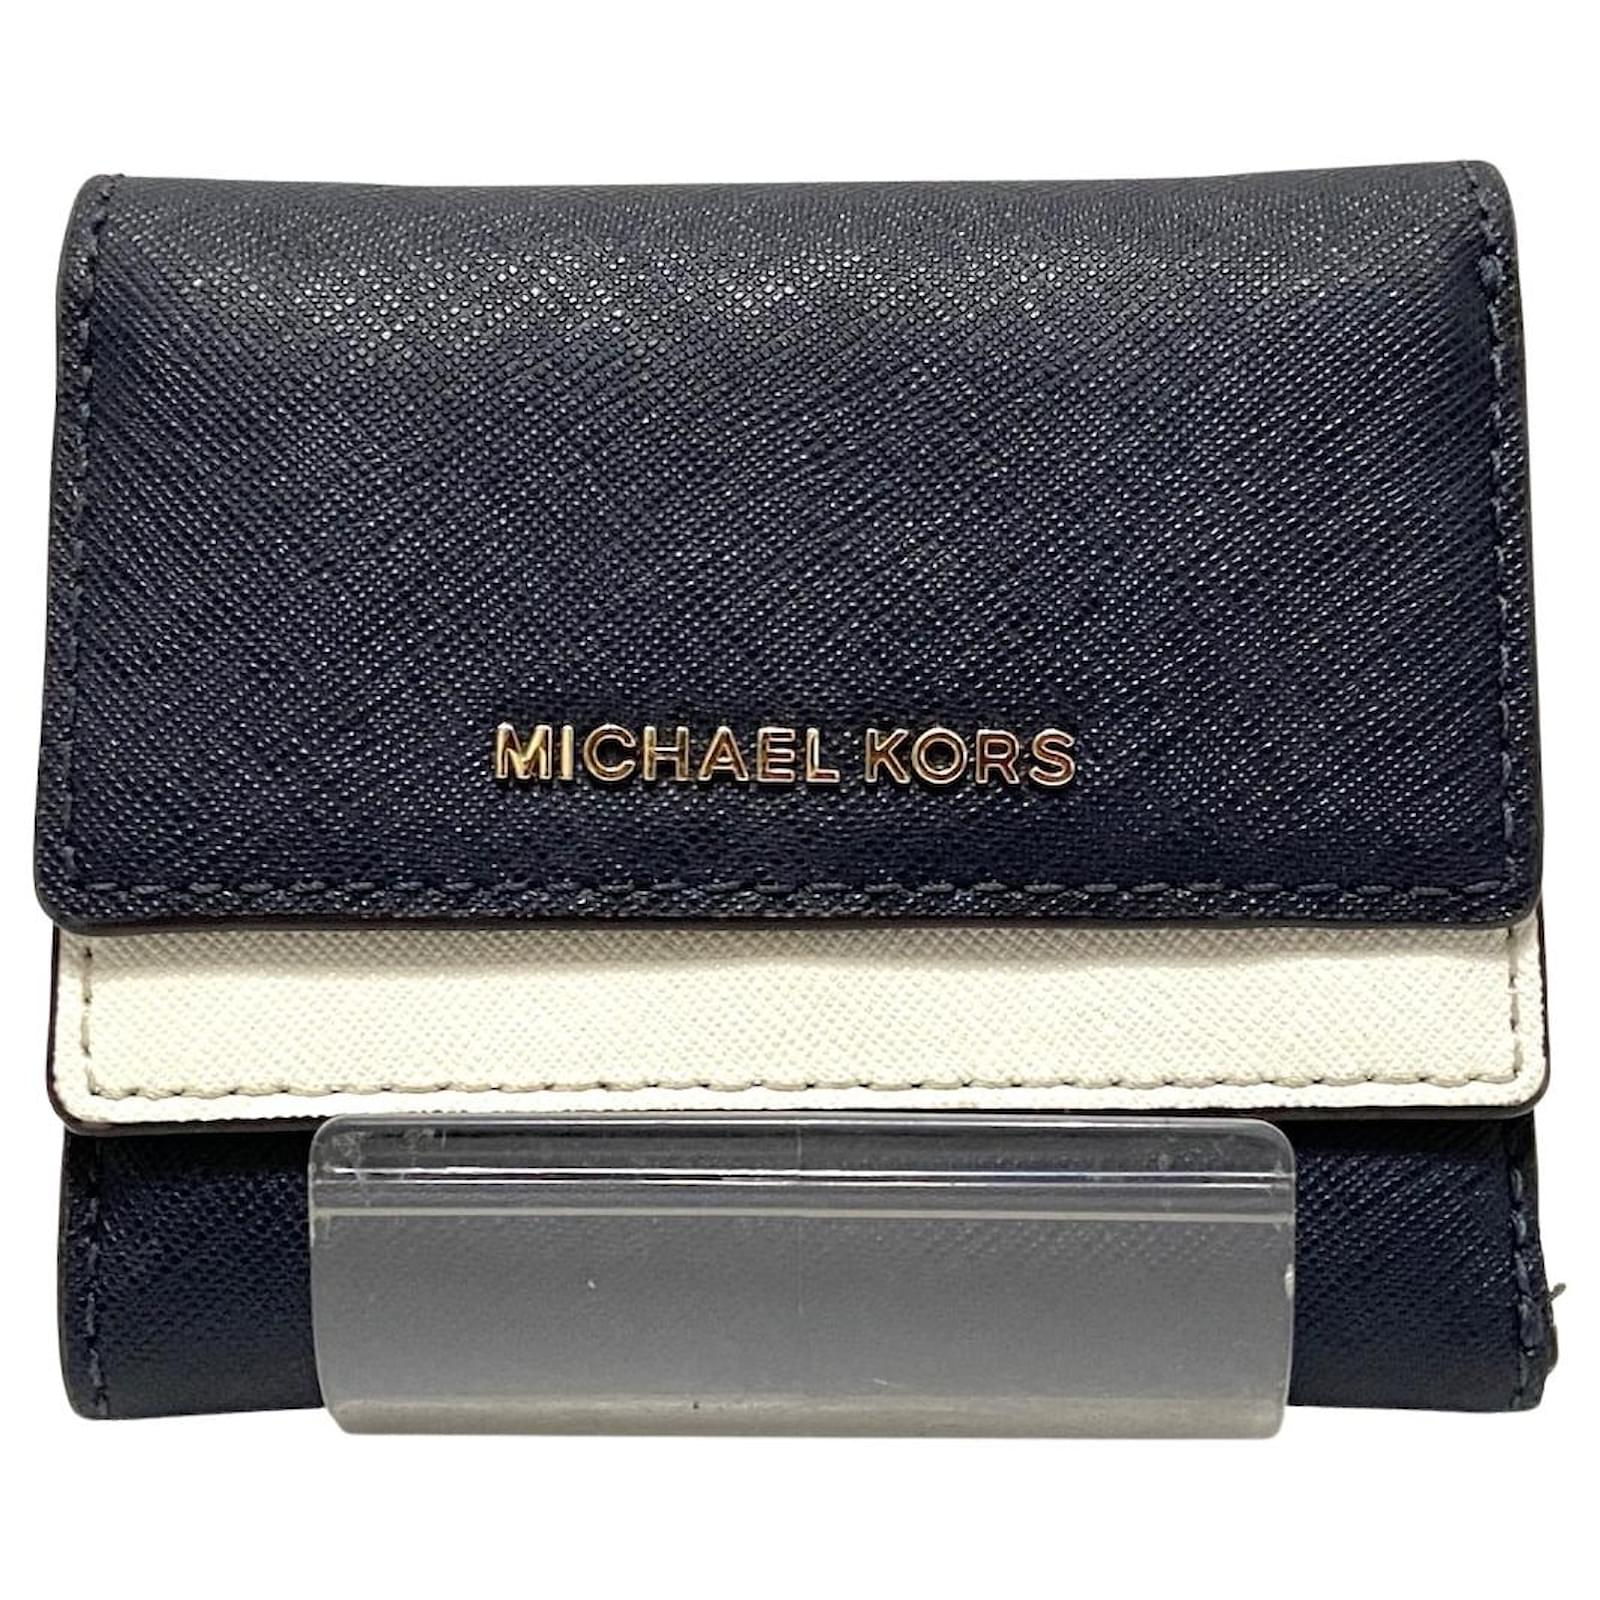 michael kors wallet blue